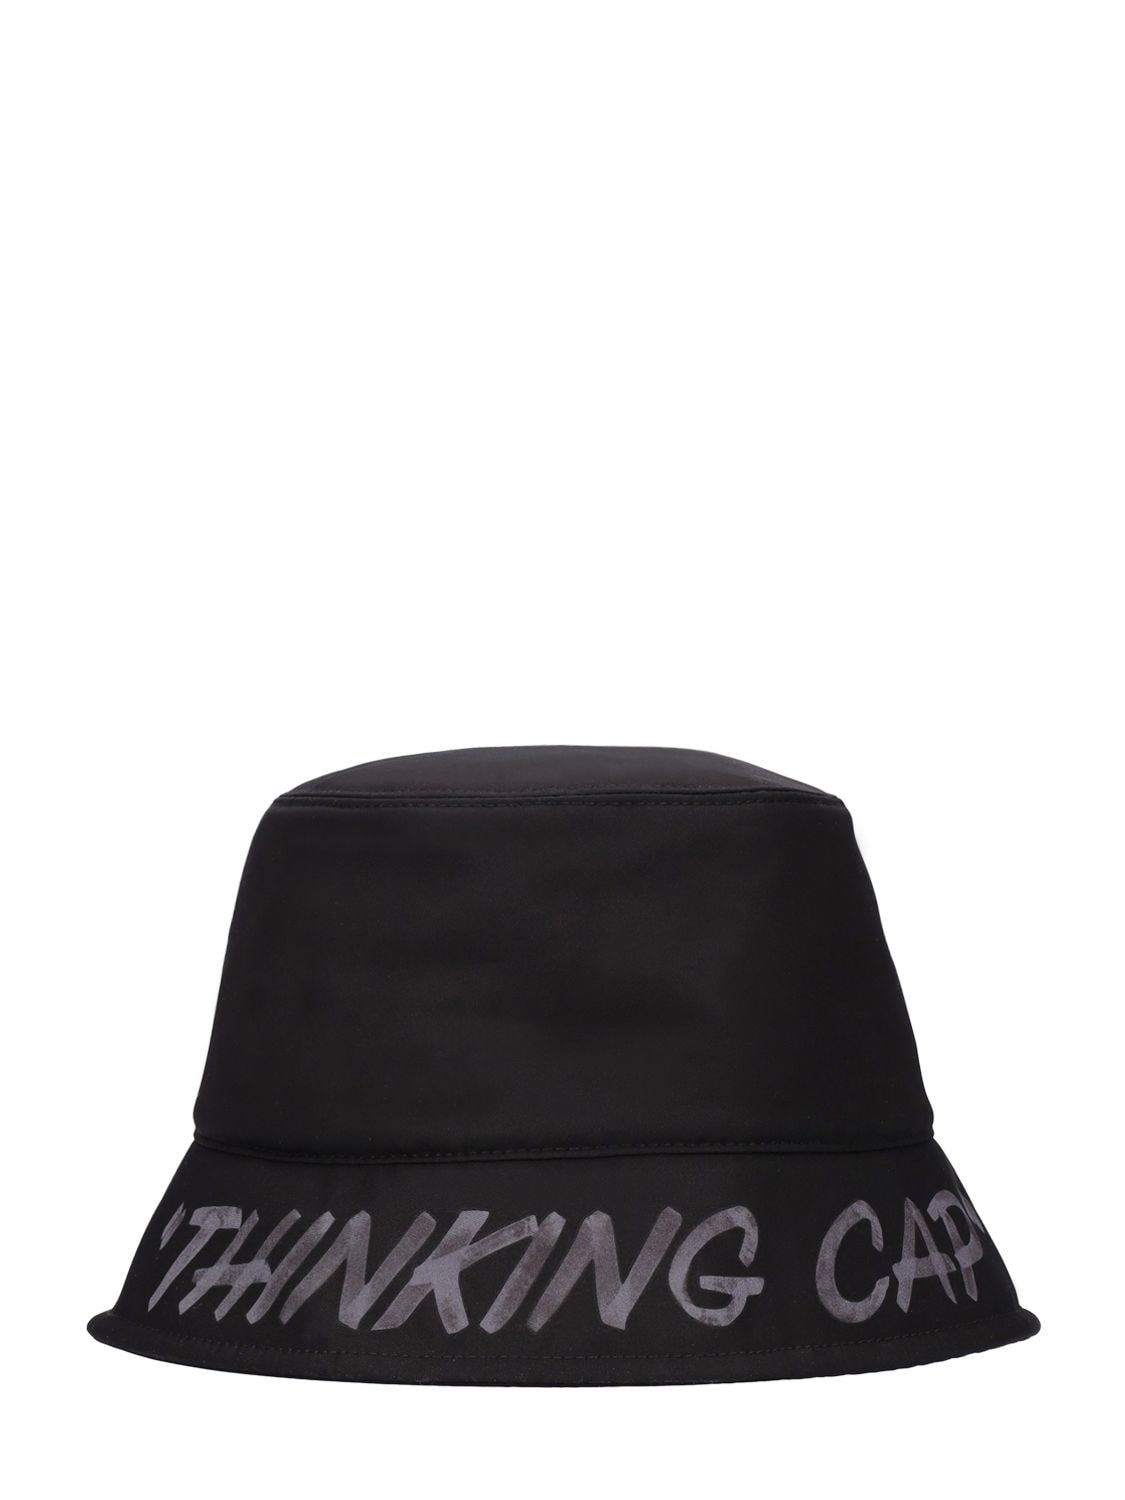 OFF-WHITE "THINKING CAP" NYLON BUCKET HAT